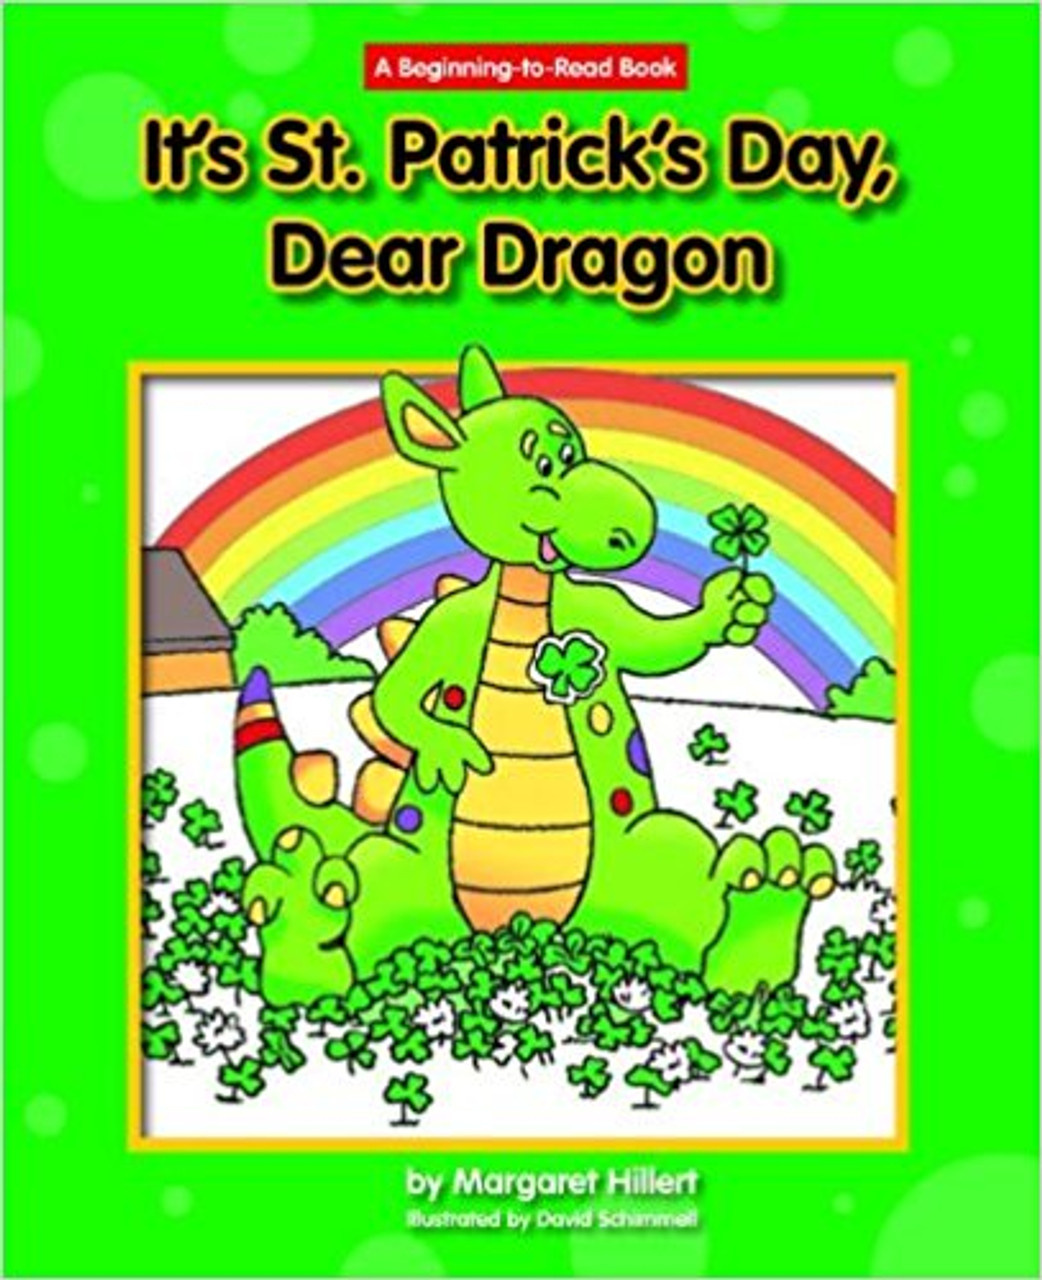 It's St. Patrick's Day, Dear Dragon by Margaret Hillert